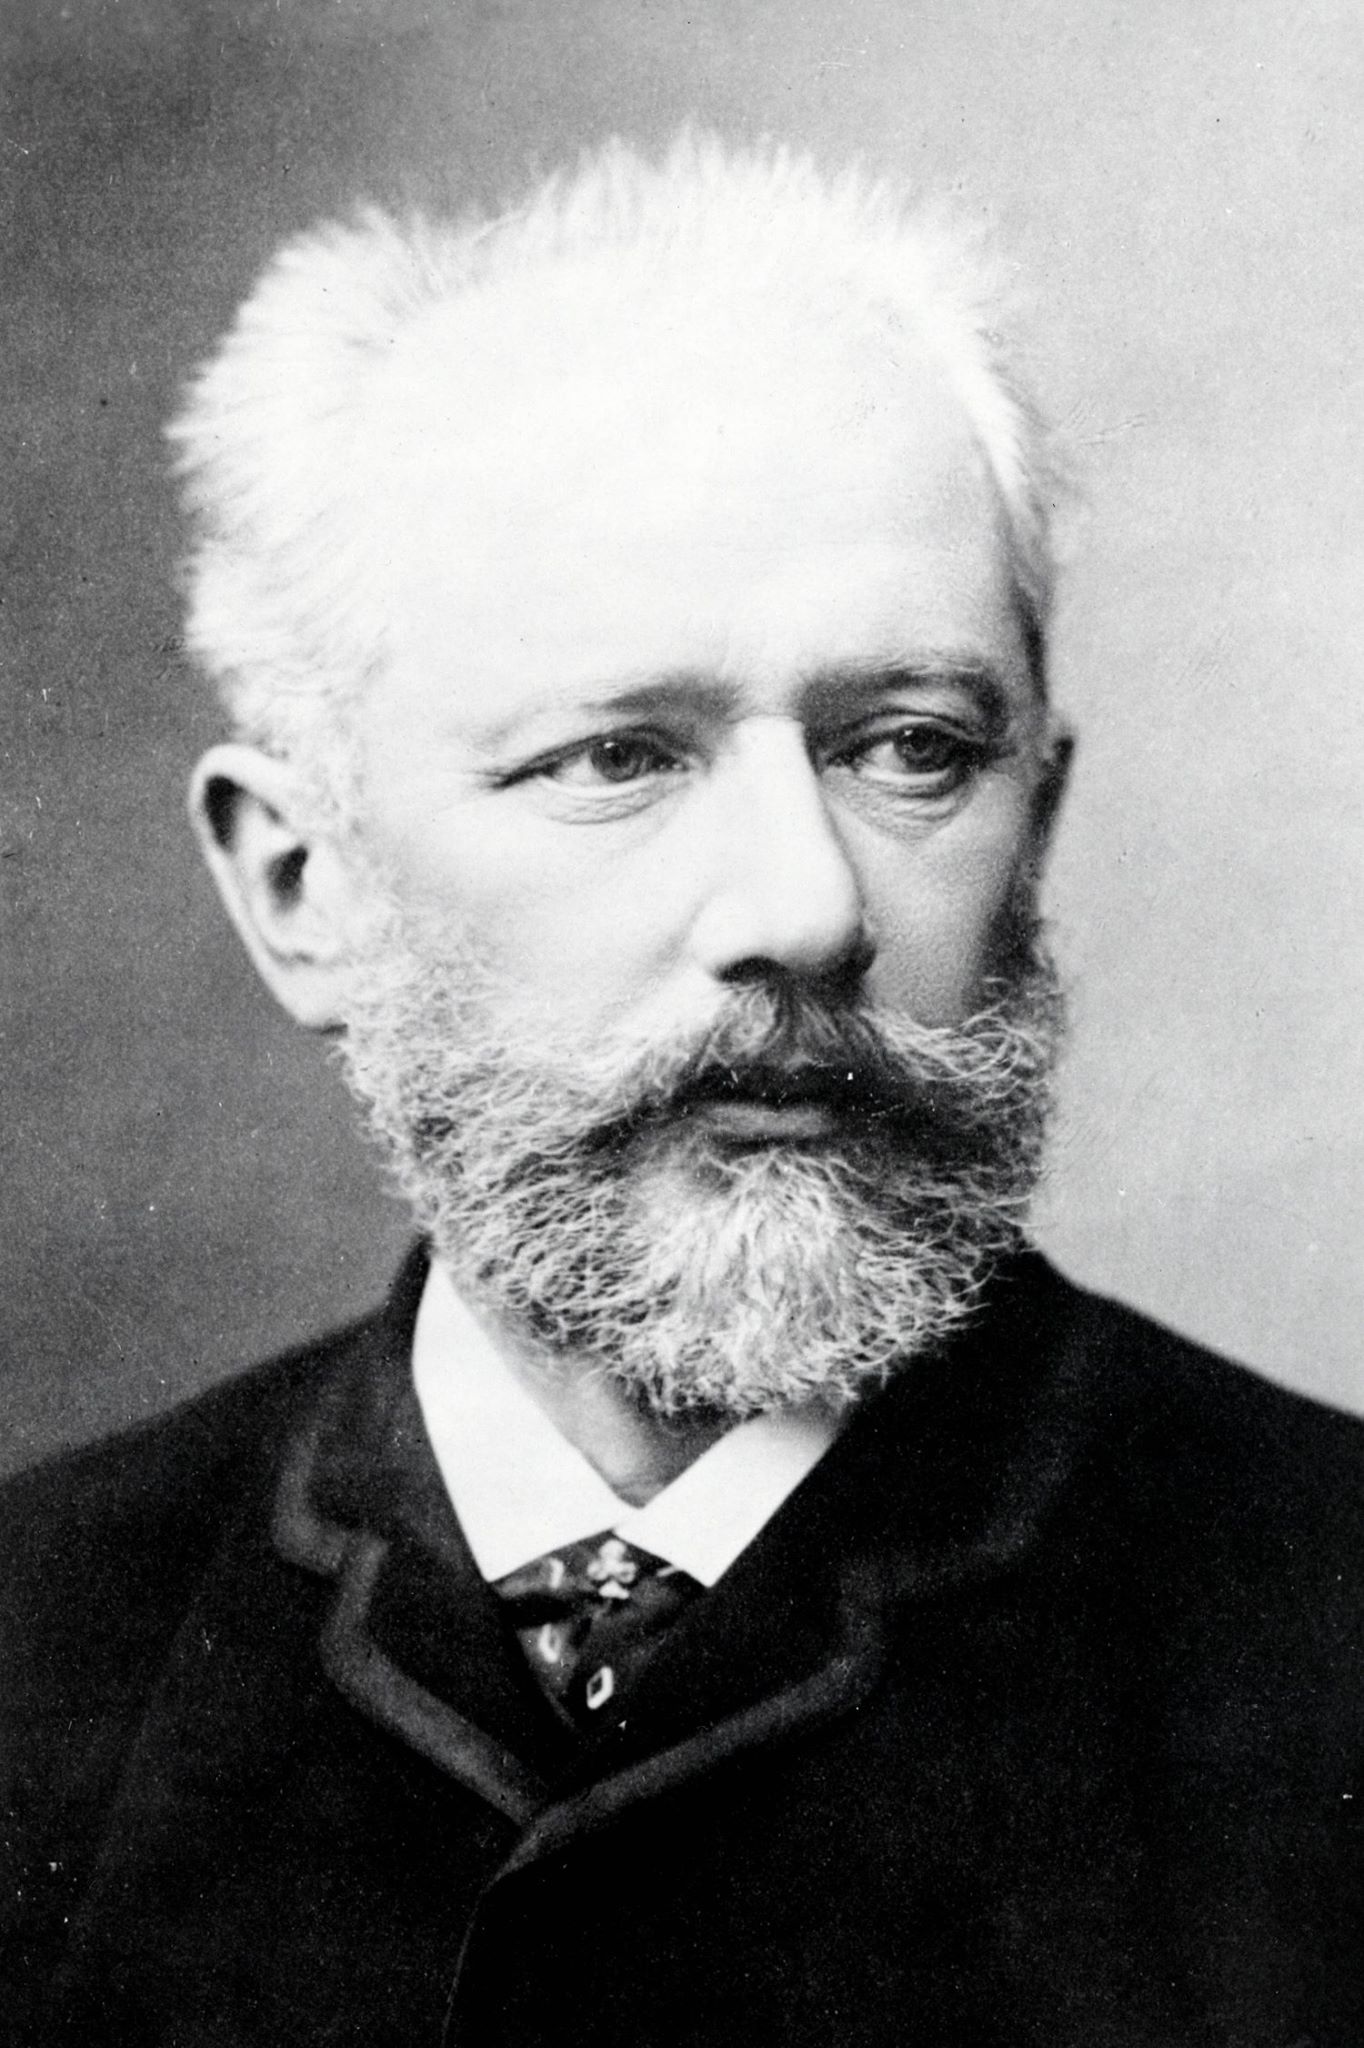 Chi era Pyotr Ilych Tchaikovsky